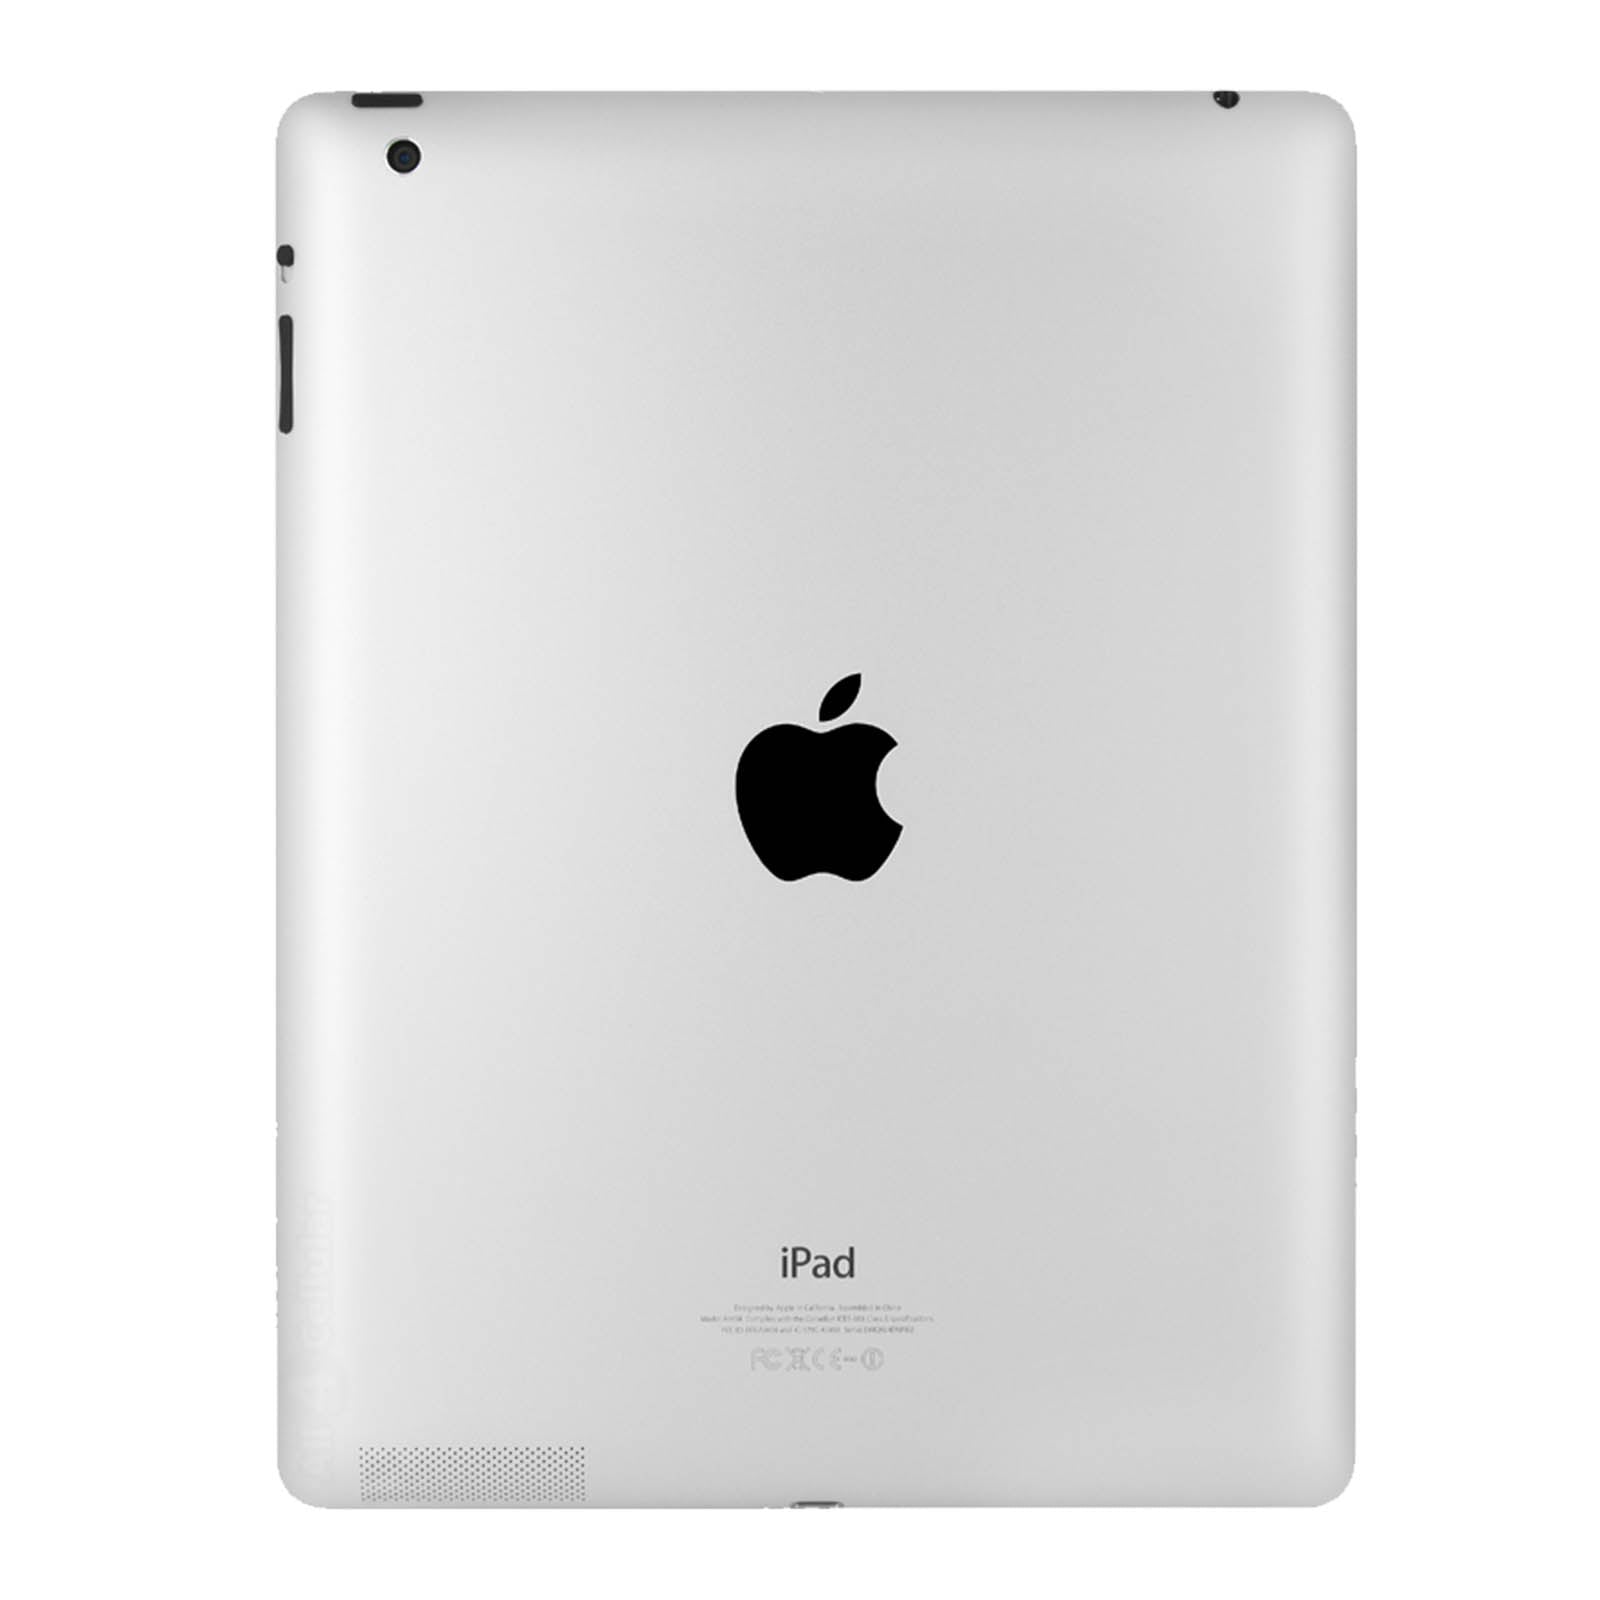 Apple iPad 4 32GB White - WiFi - Very Good